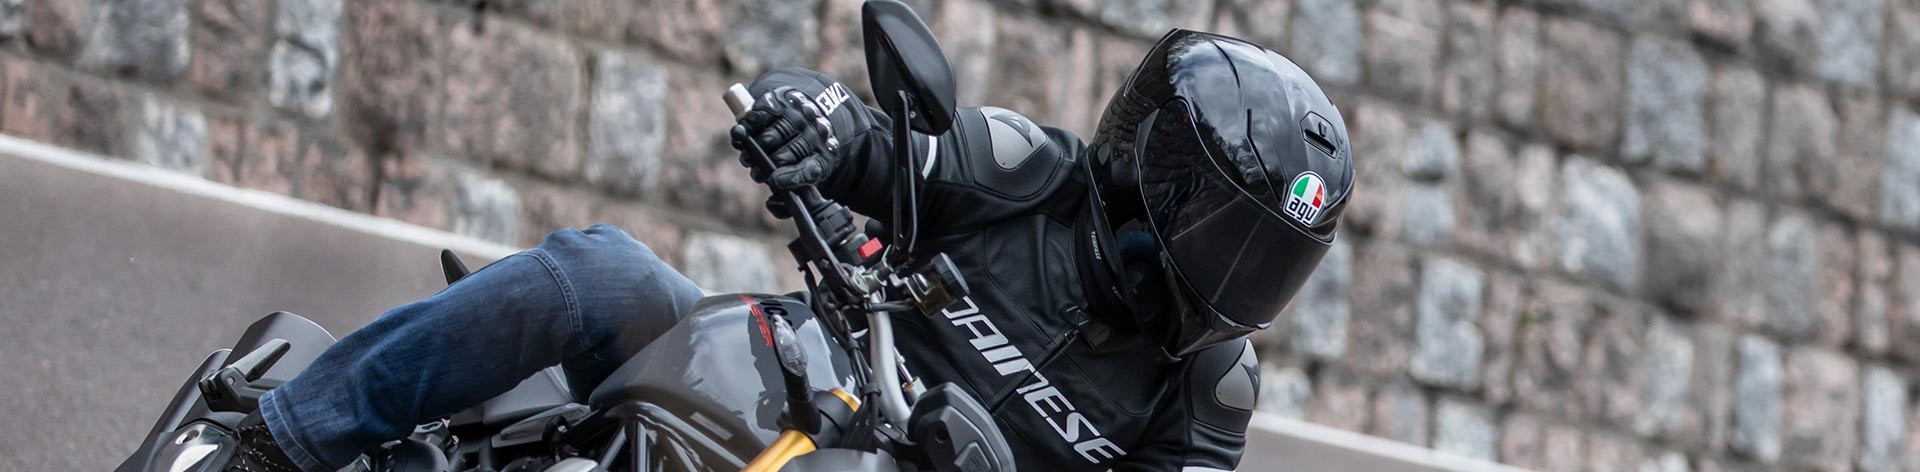 AGV Unisex-Adult Full Face K-5S Tornado Motorcycle Helmet Silver, XX-Large